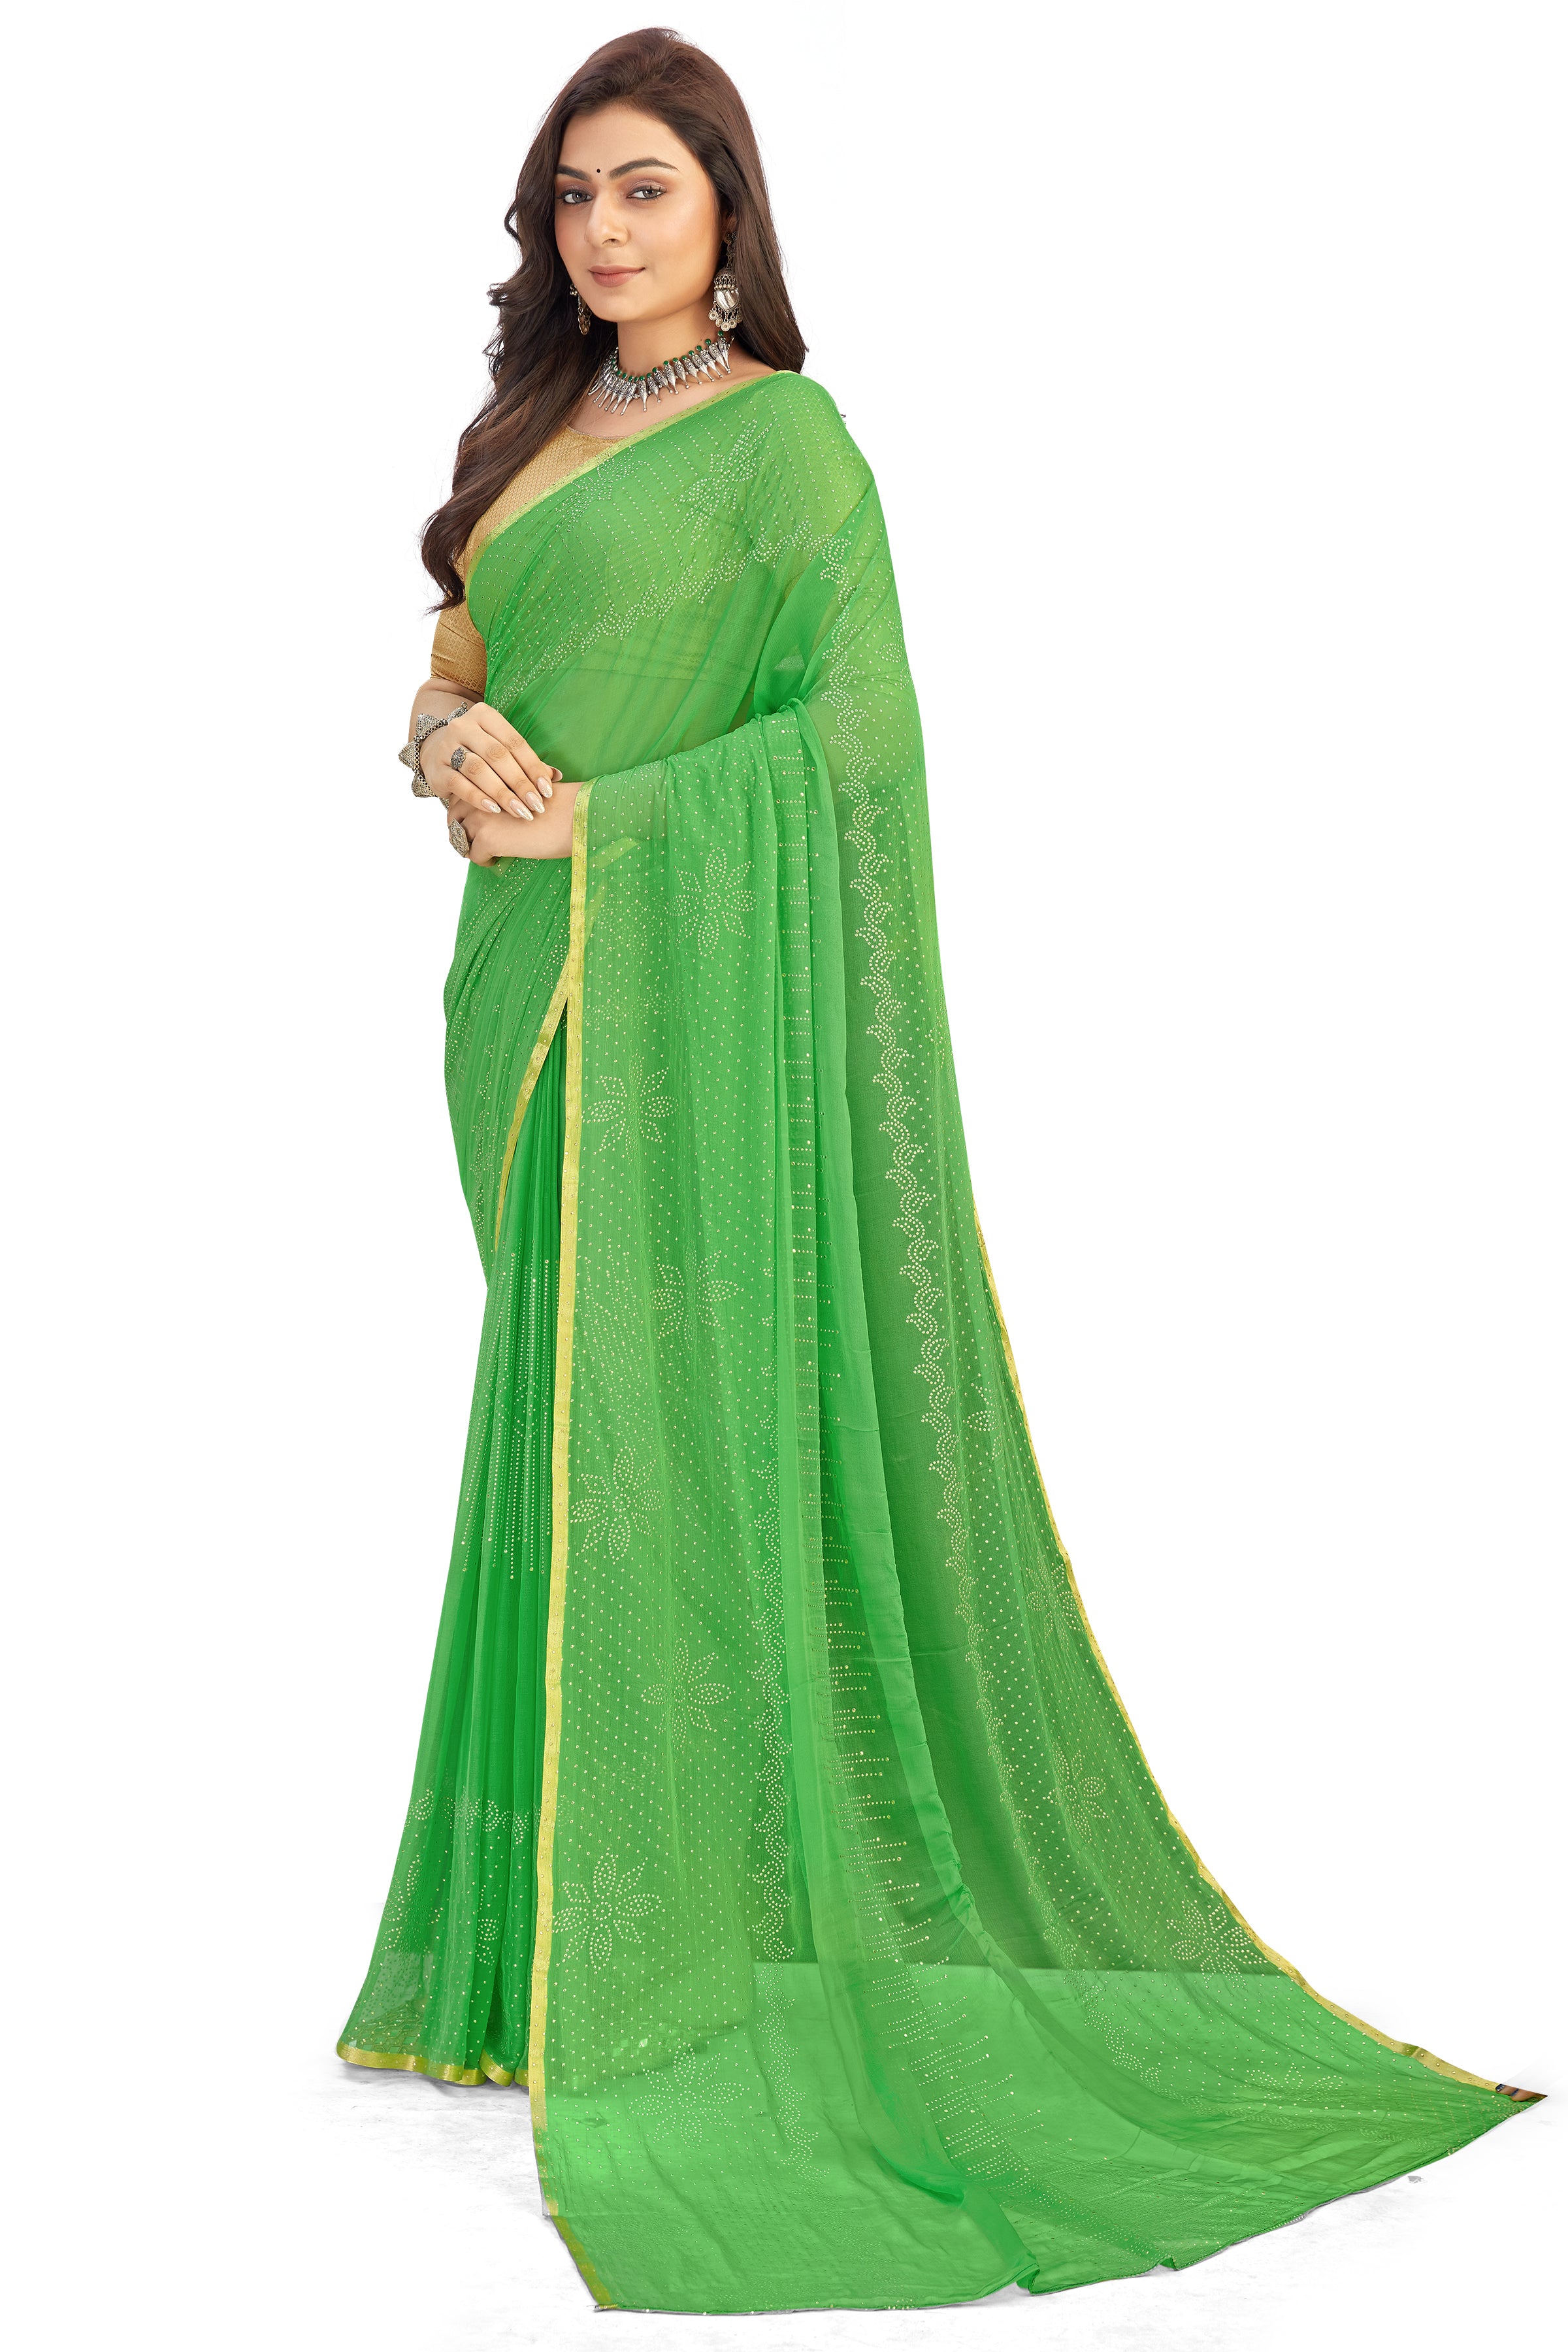 Women's Bandhani Daily Wear Chiffon Sari With Blouse Piece (Light Green) - NIMIDHYA